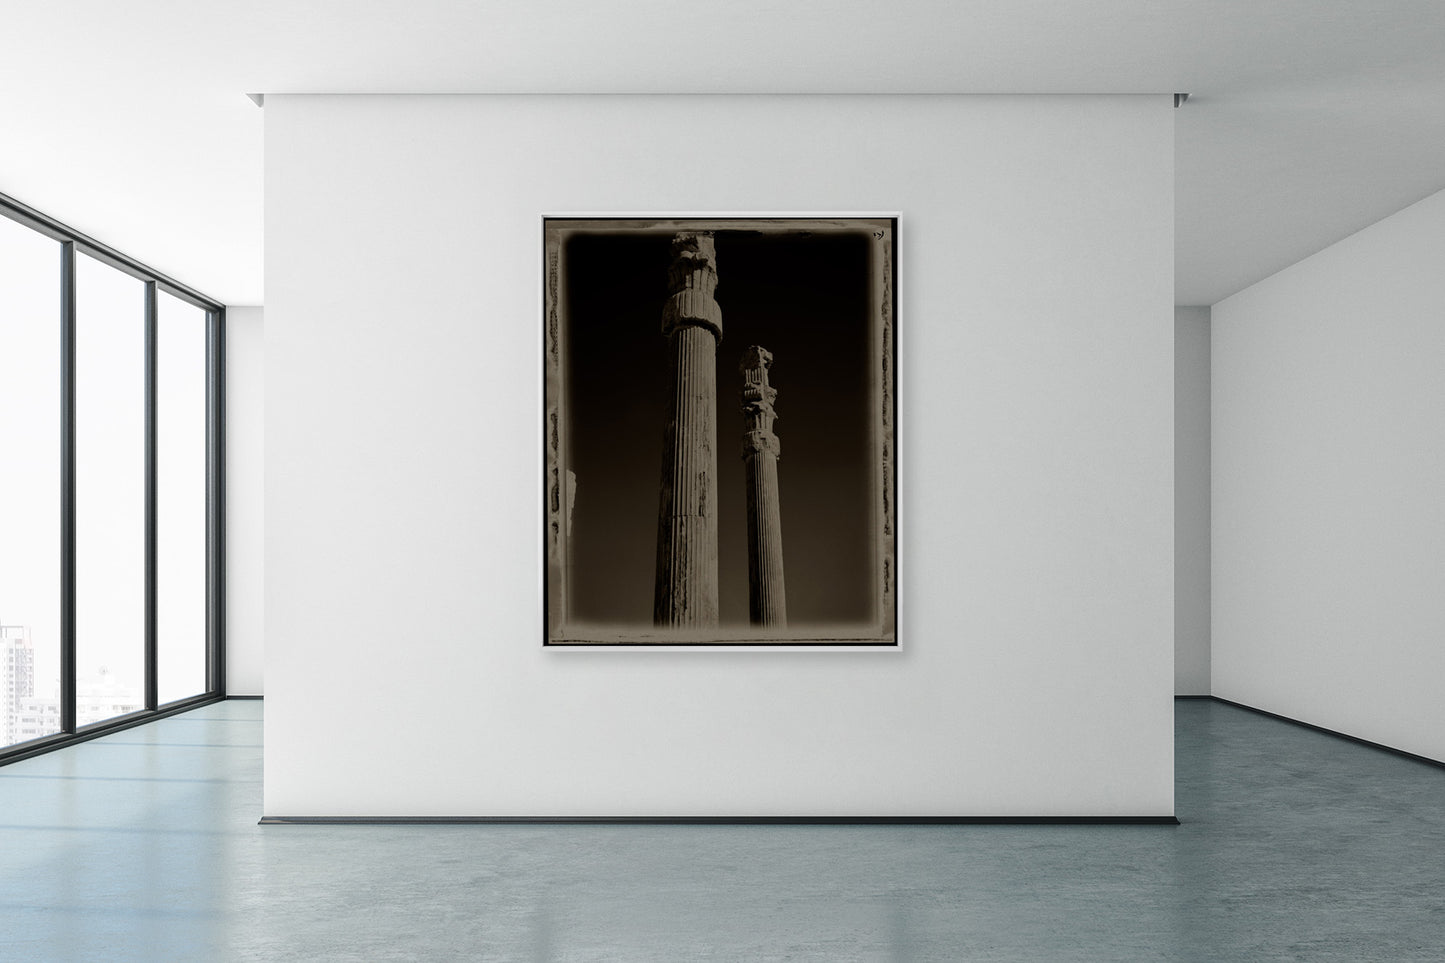 Two Persepolitan Columns